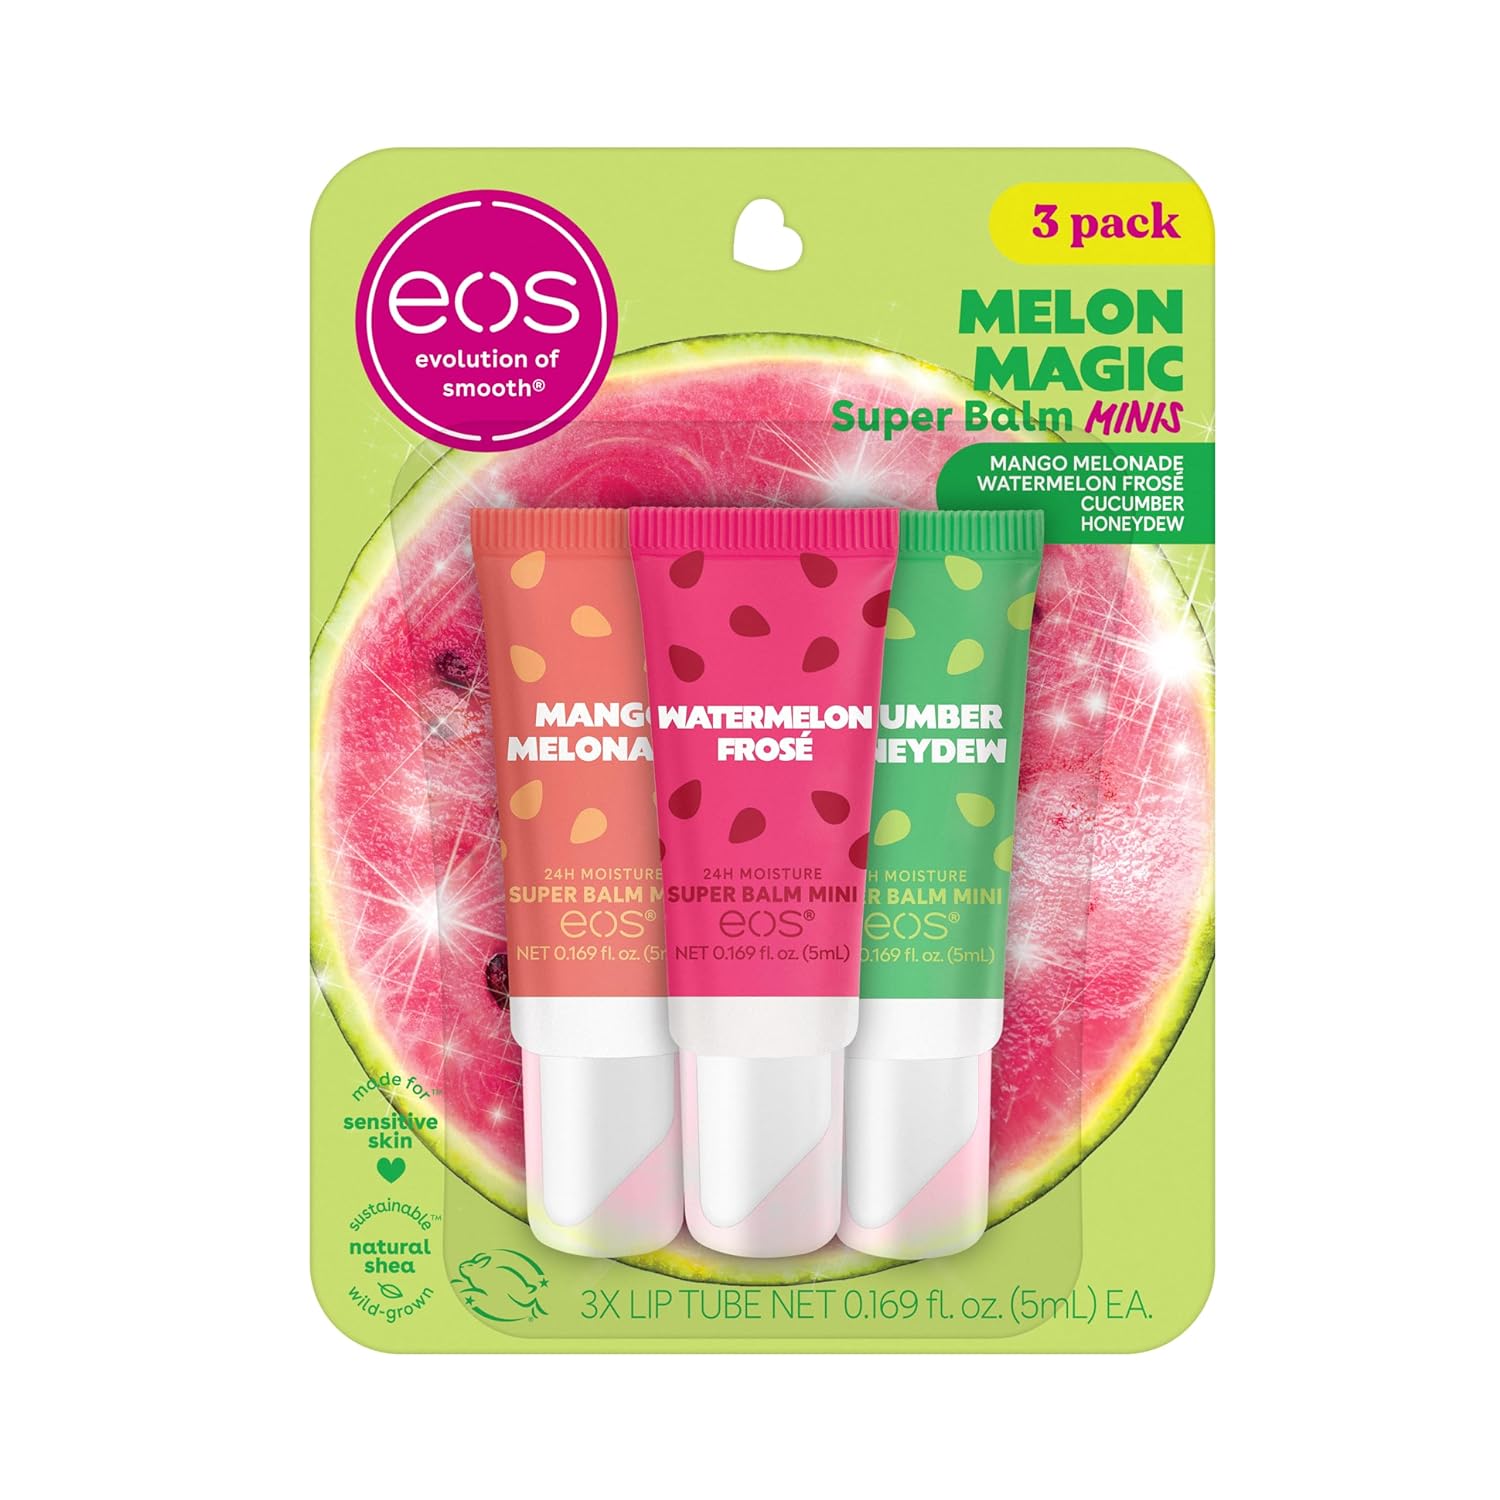 eos 24H Moisture Super Balm Minis- Melon Magic, Limited-Edition Lip Mask, Variety Pack, 0.169 fl oz, 3-Pack